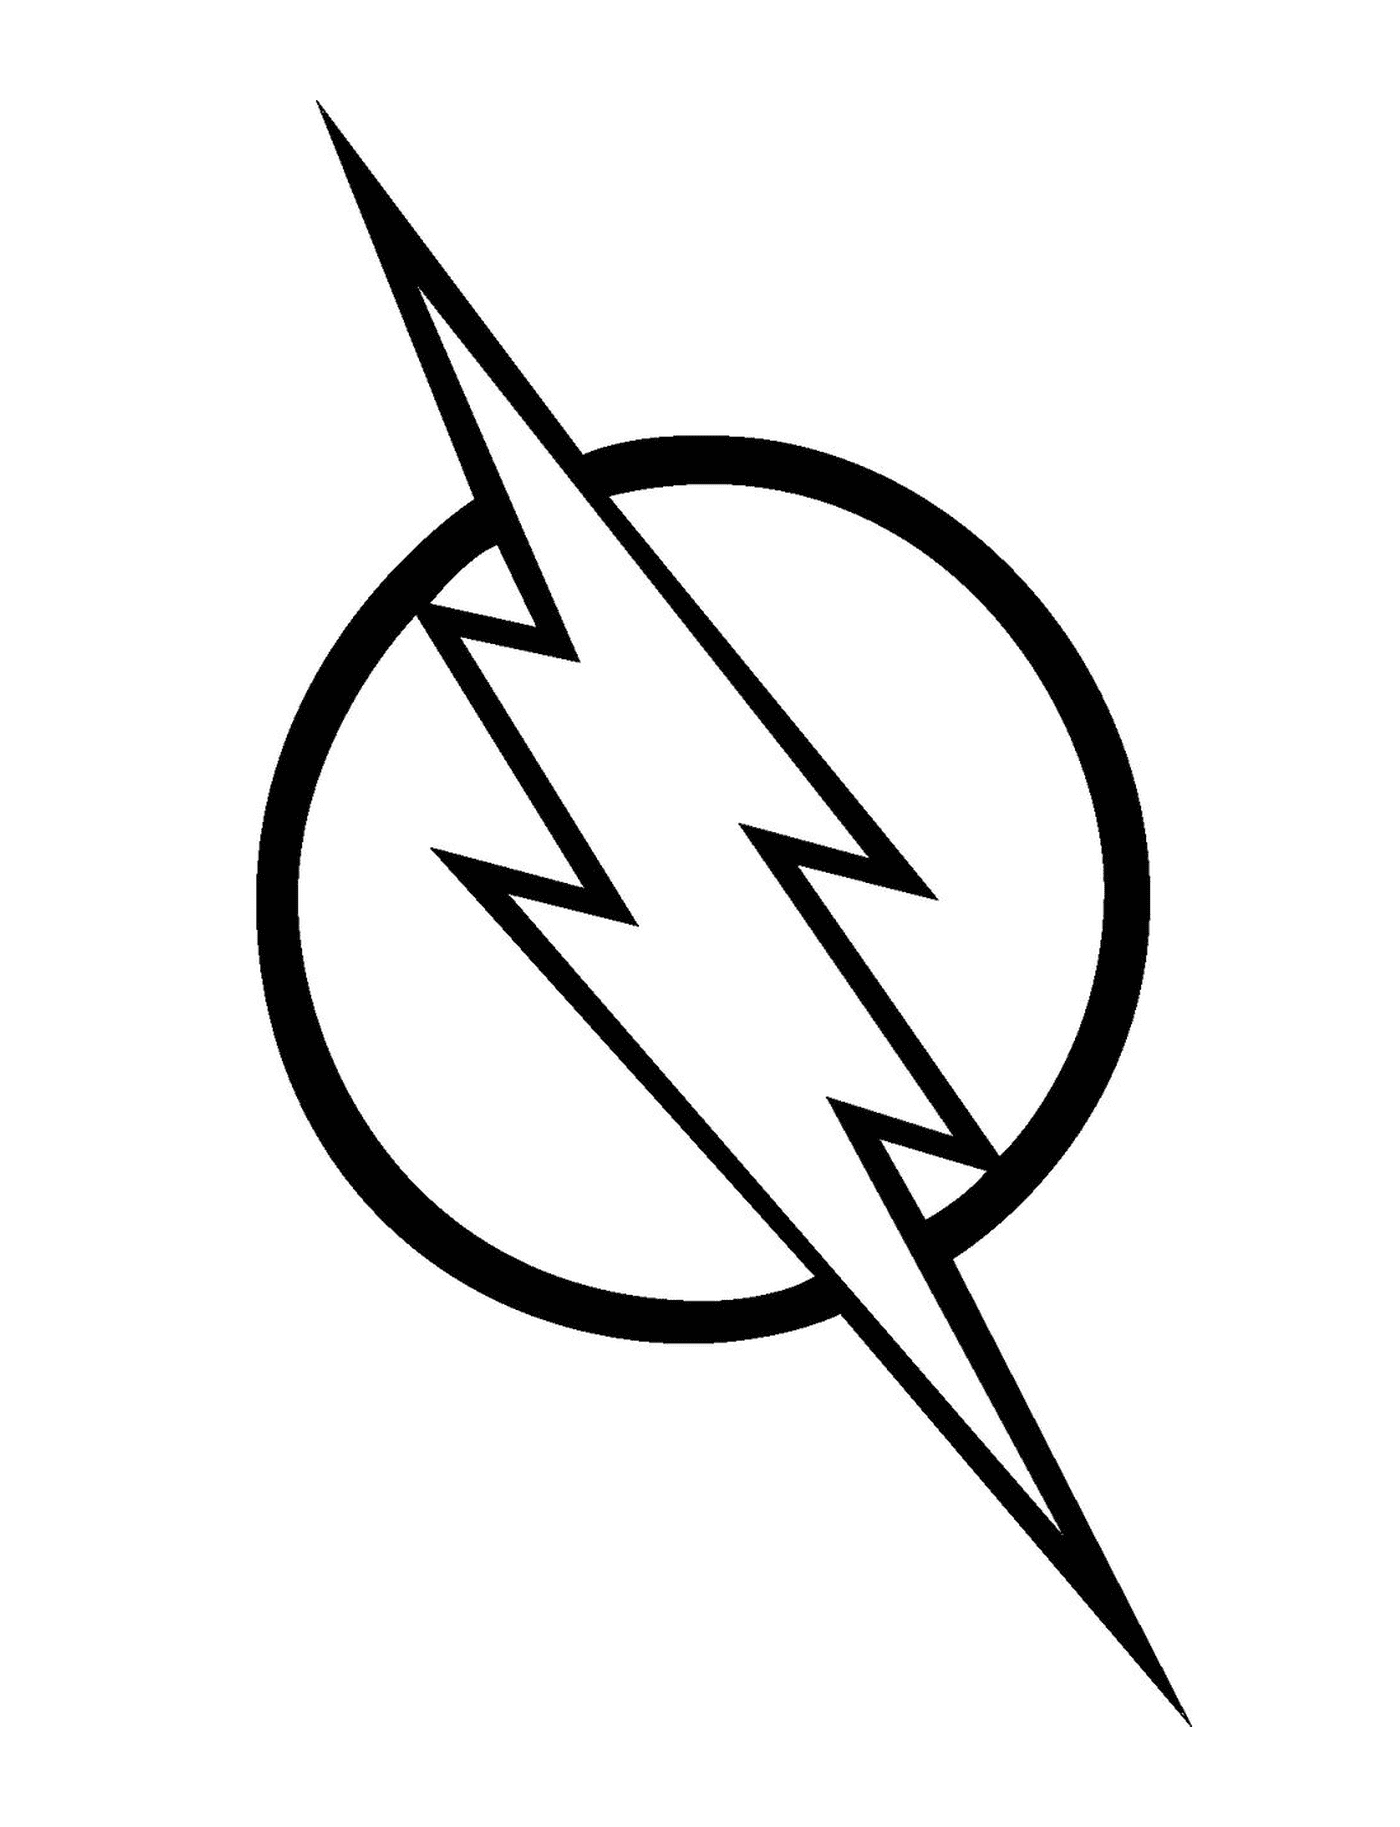  The logo of the superhero Flash 